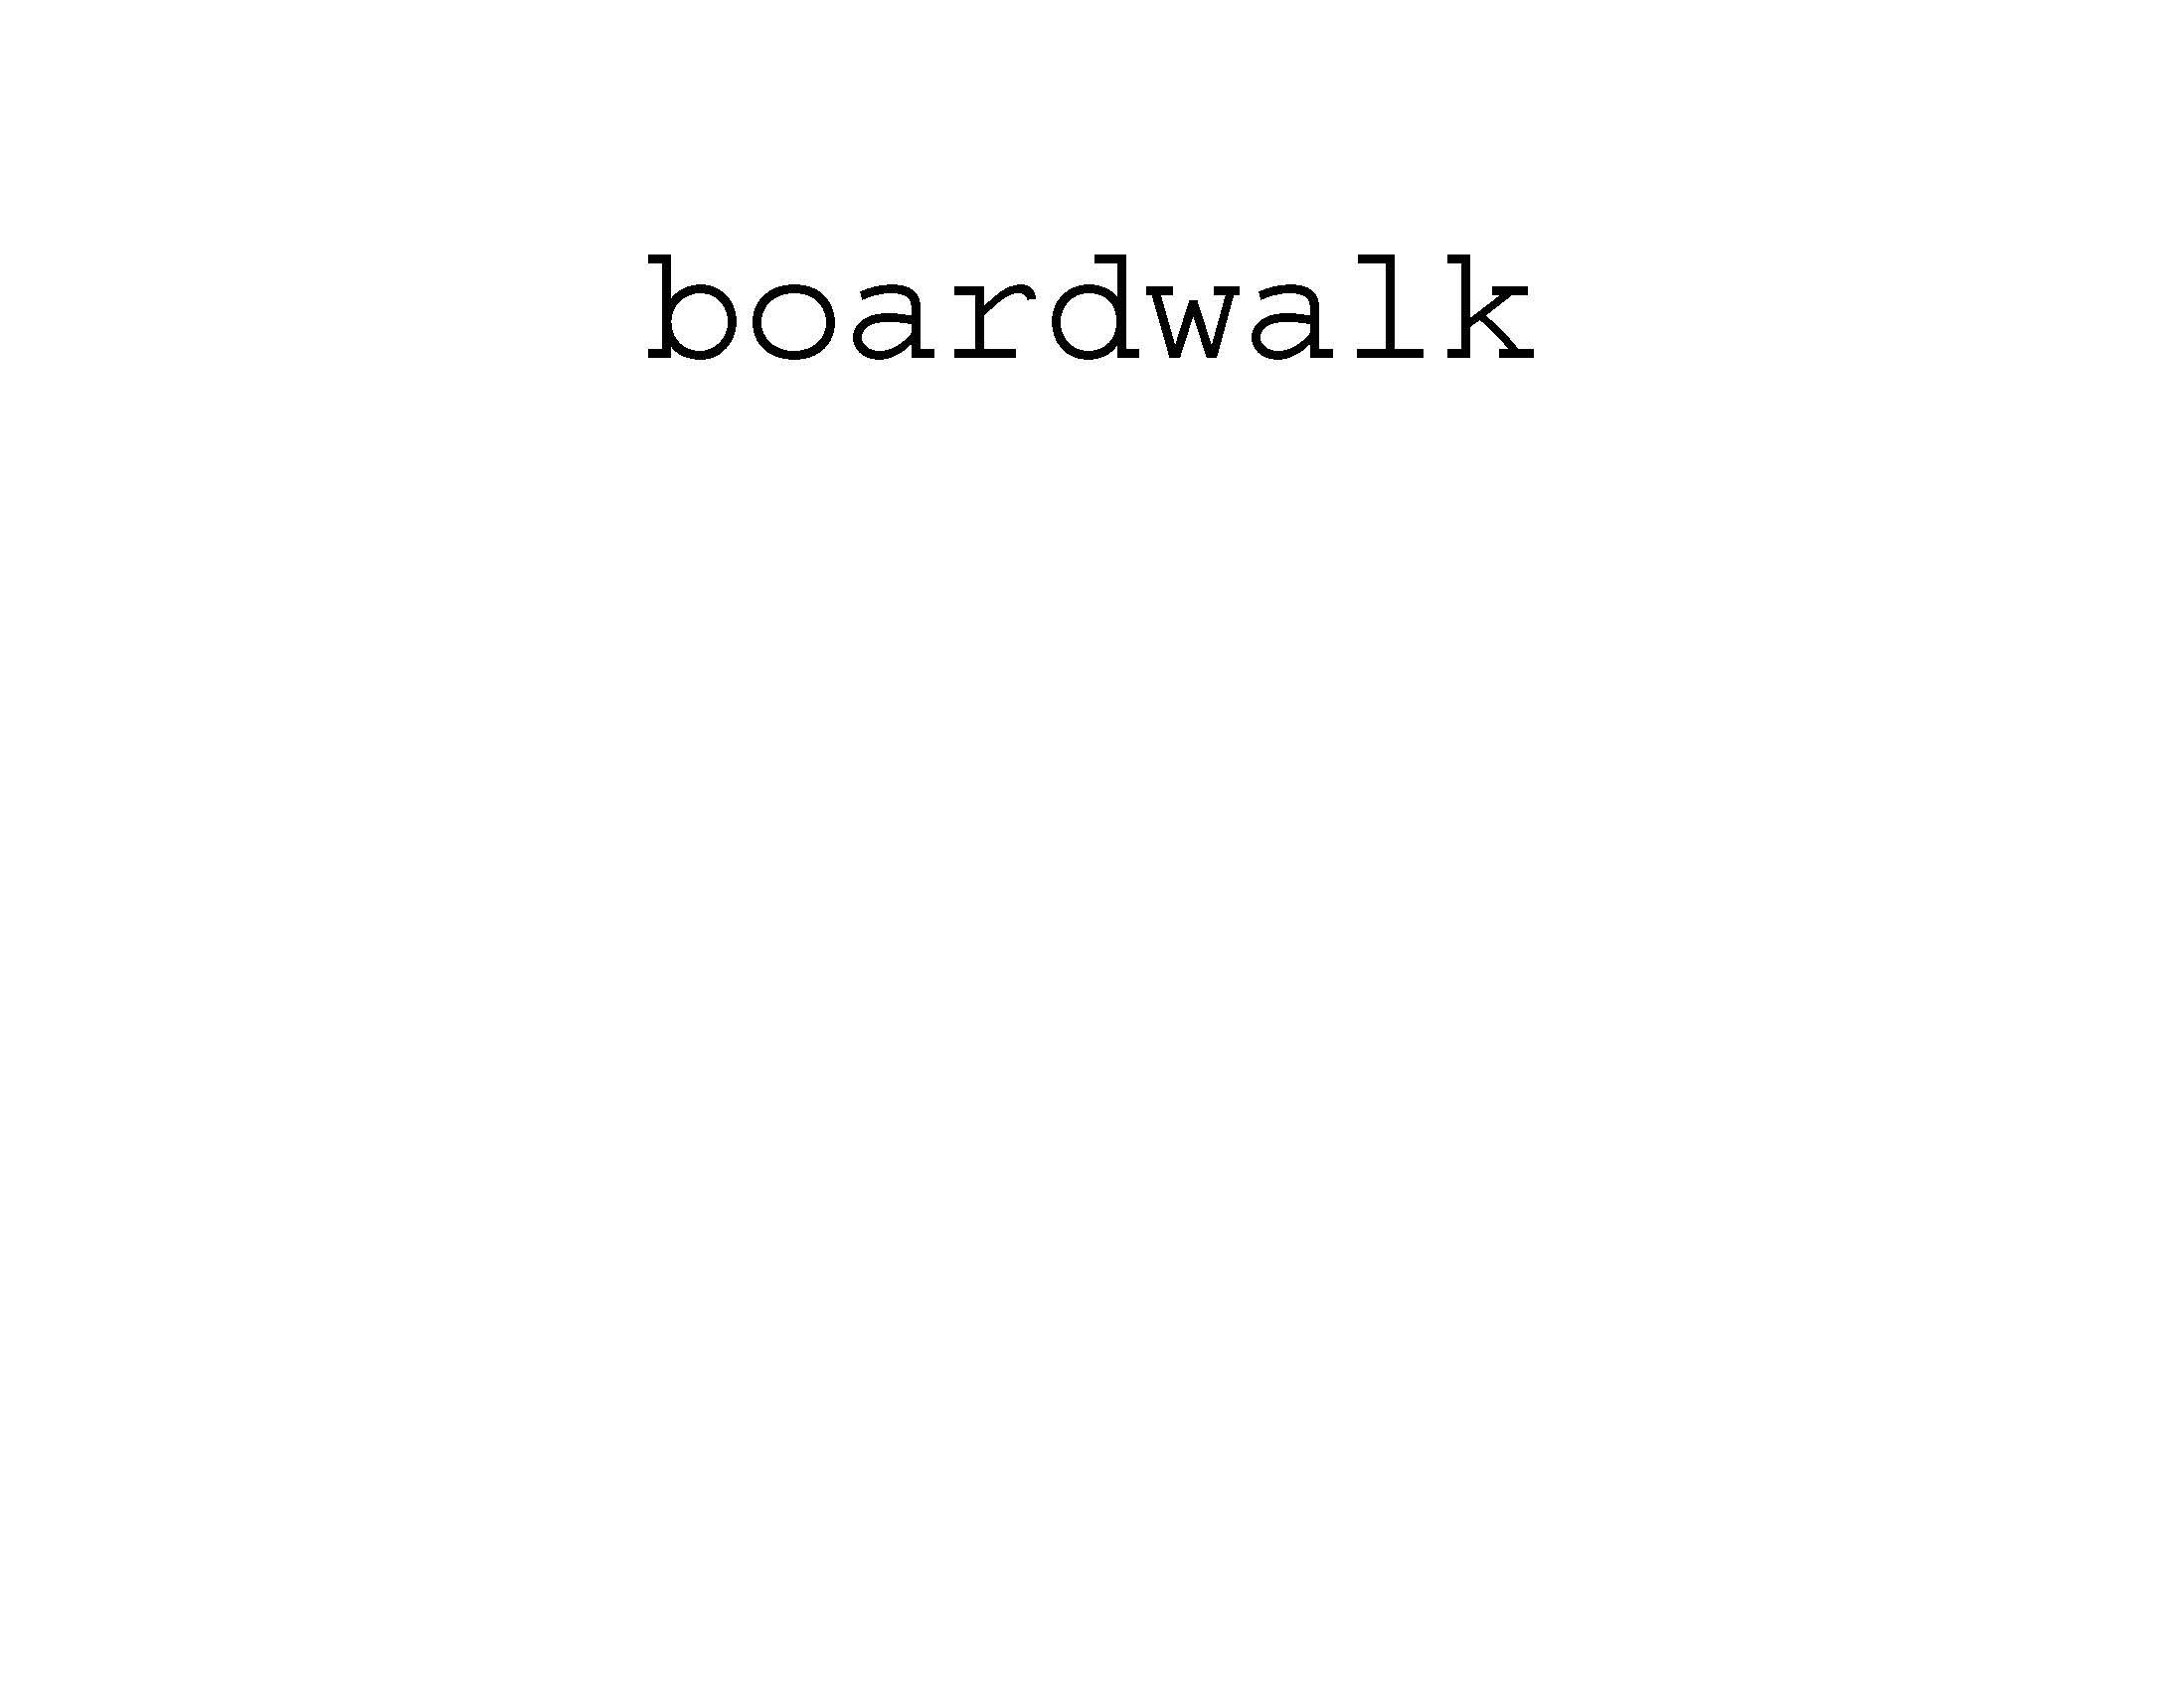 Boardwalk 3rd draft_Page_01.jpg